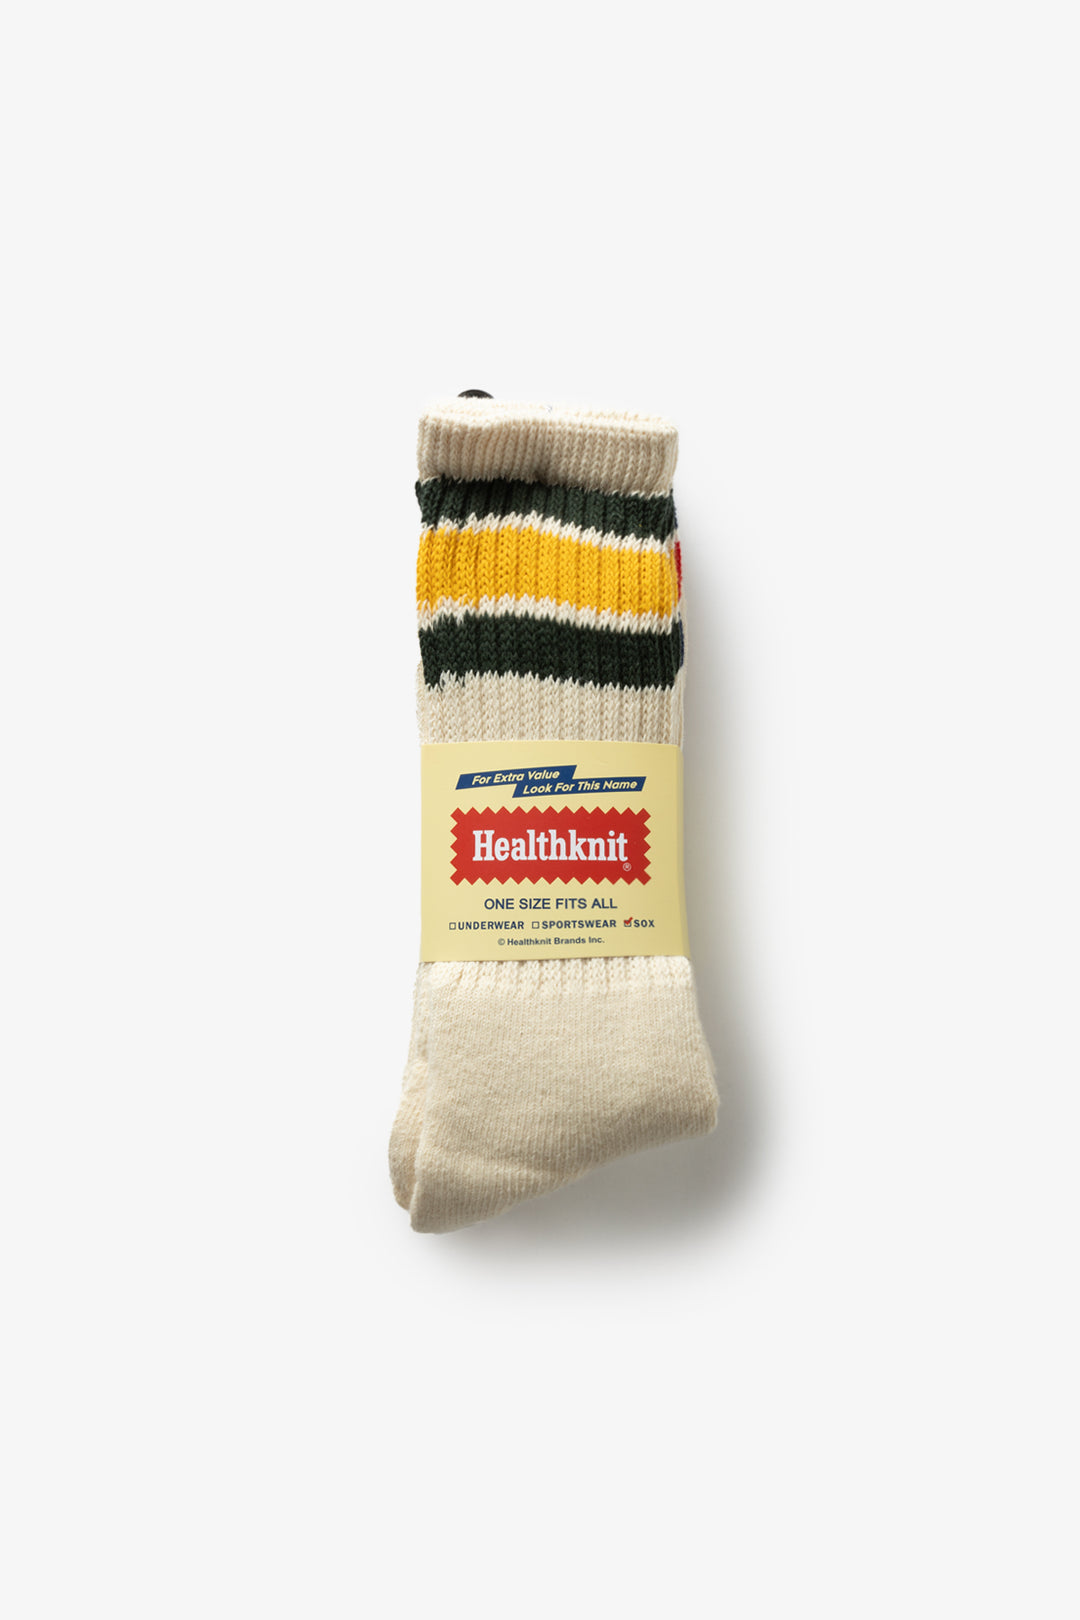 Healthknit natural multi sock